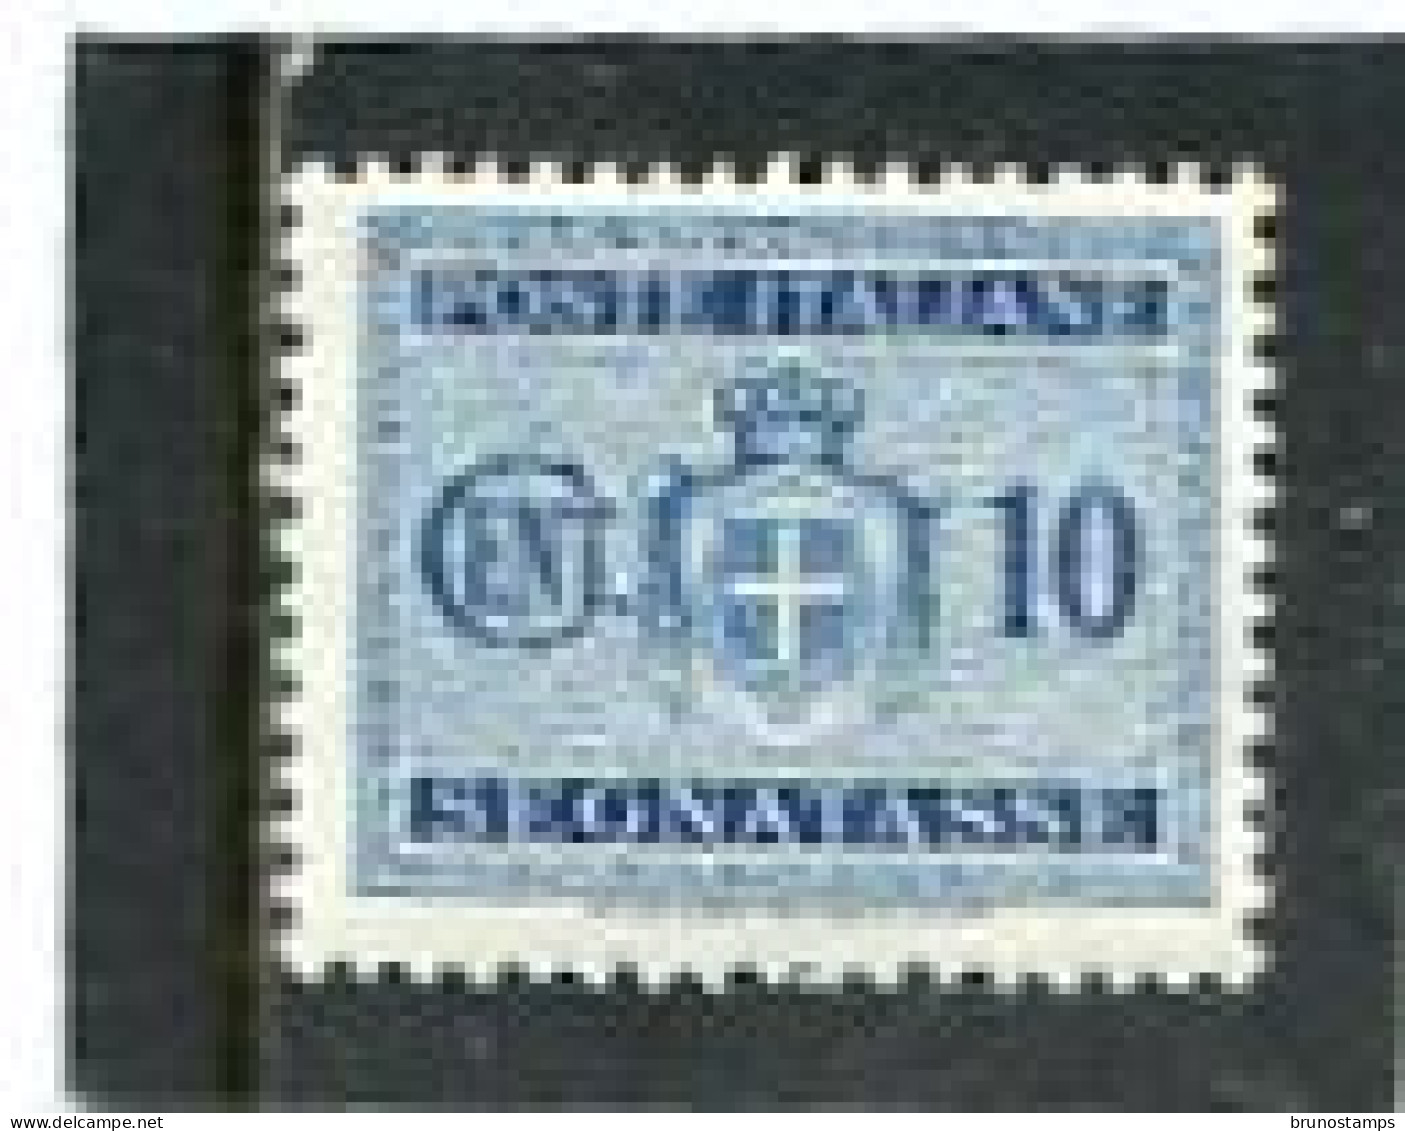 ITALIA - 1945  POSTAGE DUE  10c  WMK  MINT NH - Portomarken